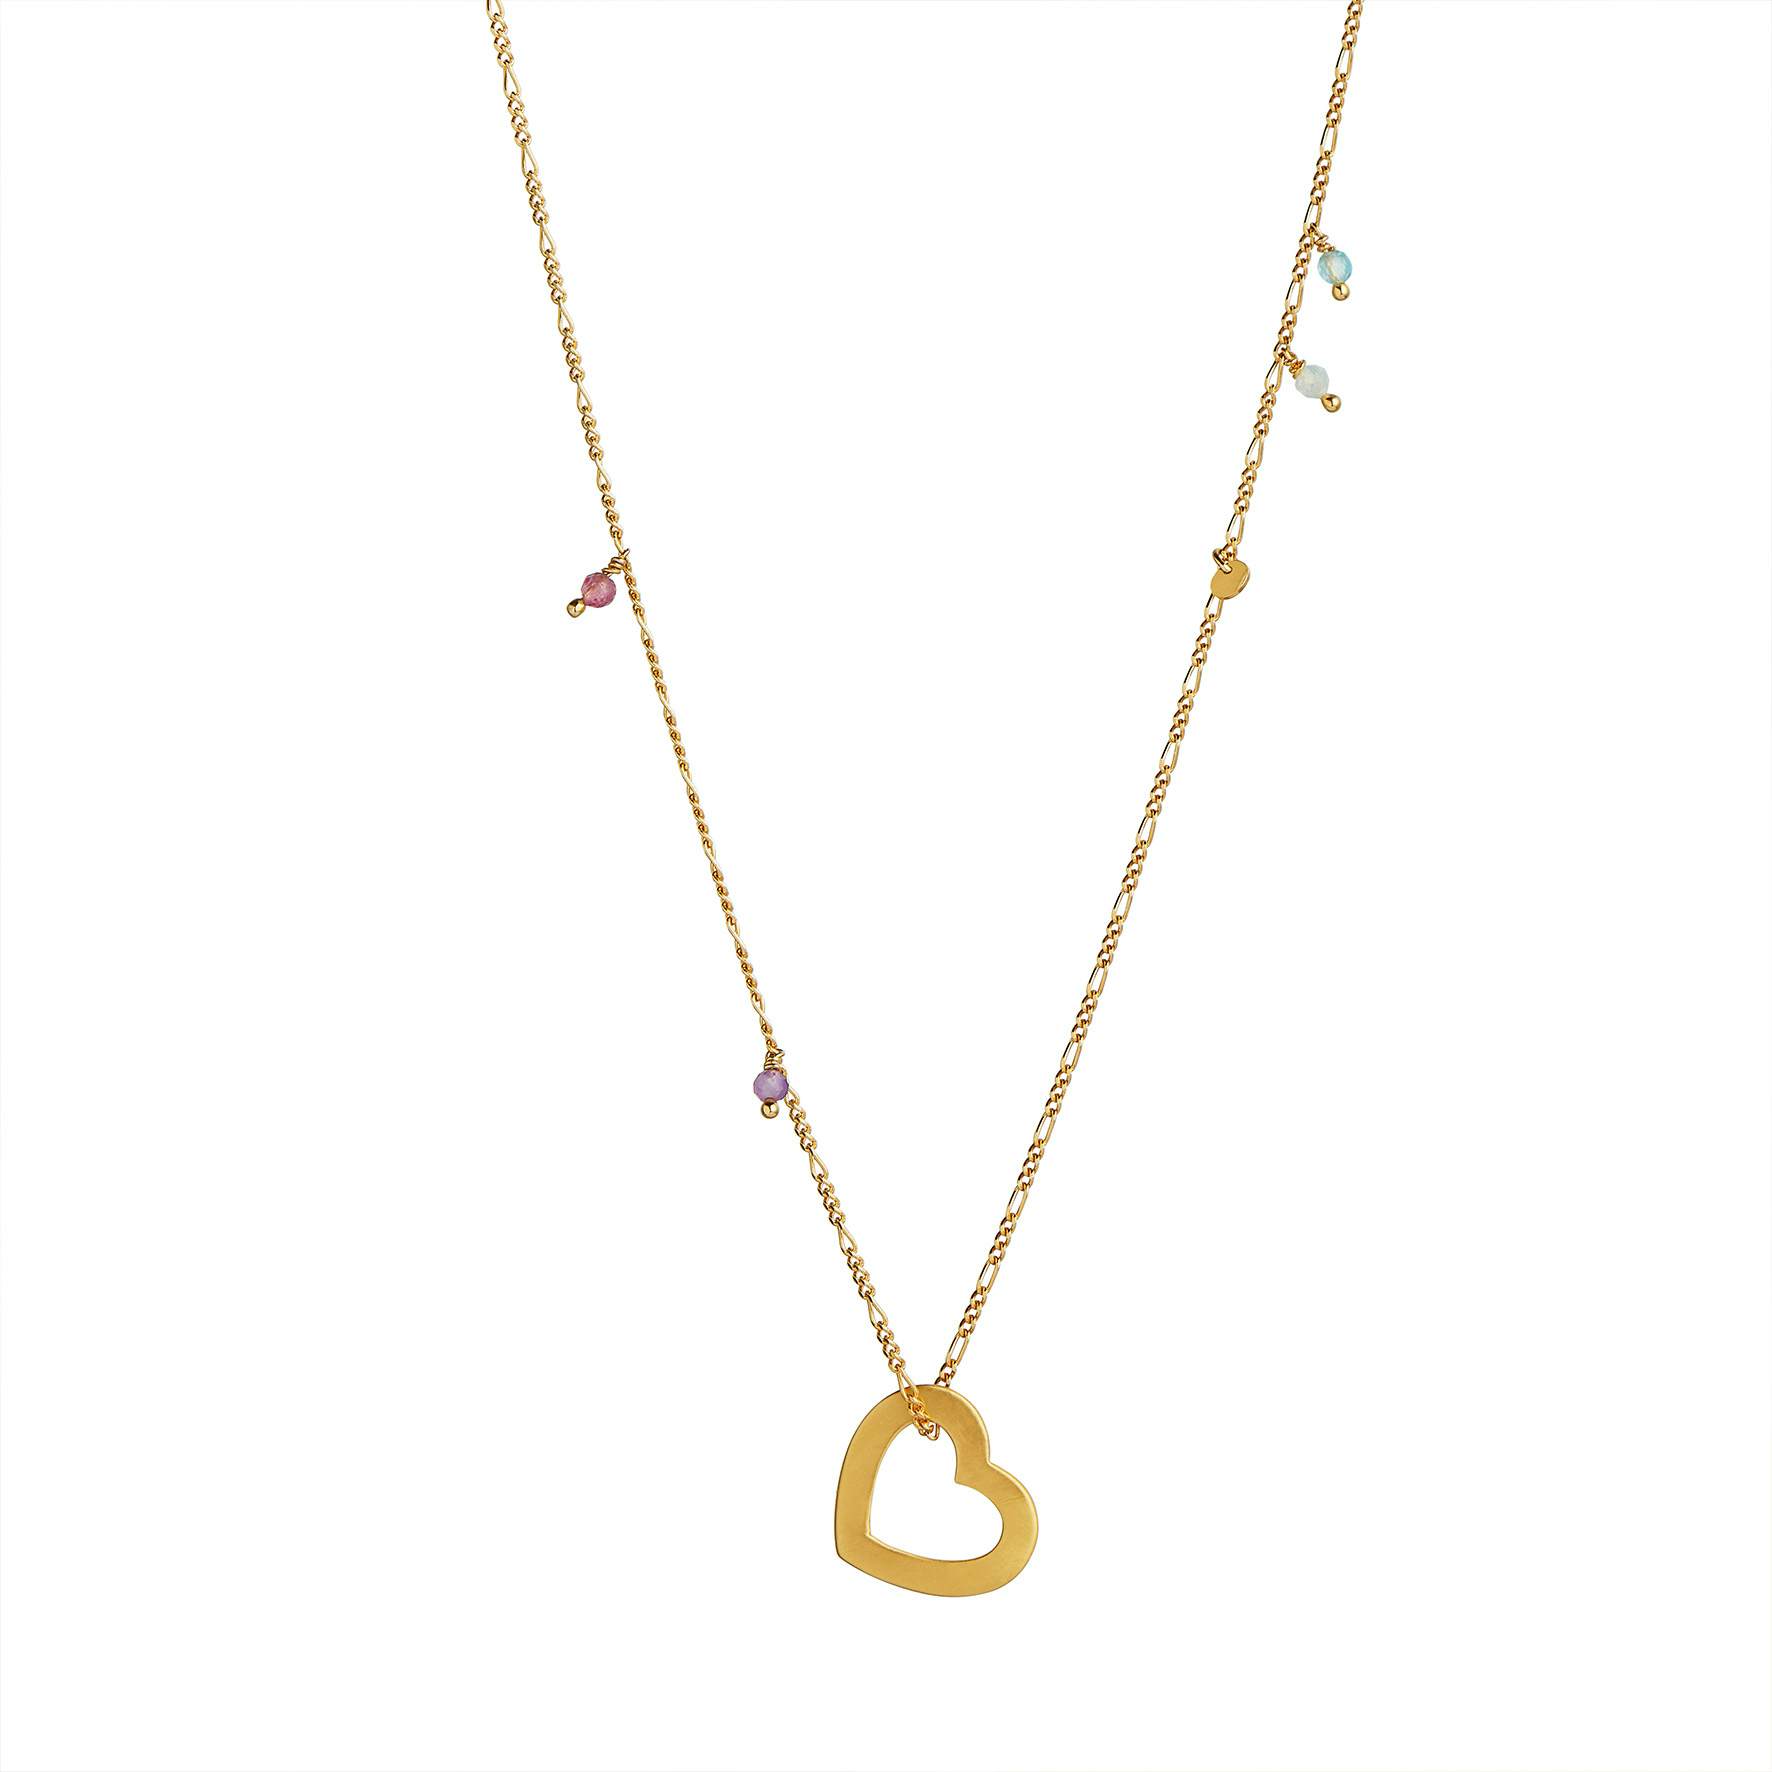 Open Love Heart Pendant fra STINE A Jewelry i Forgyldt-Sølv Sterling 925